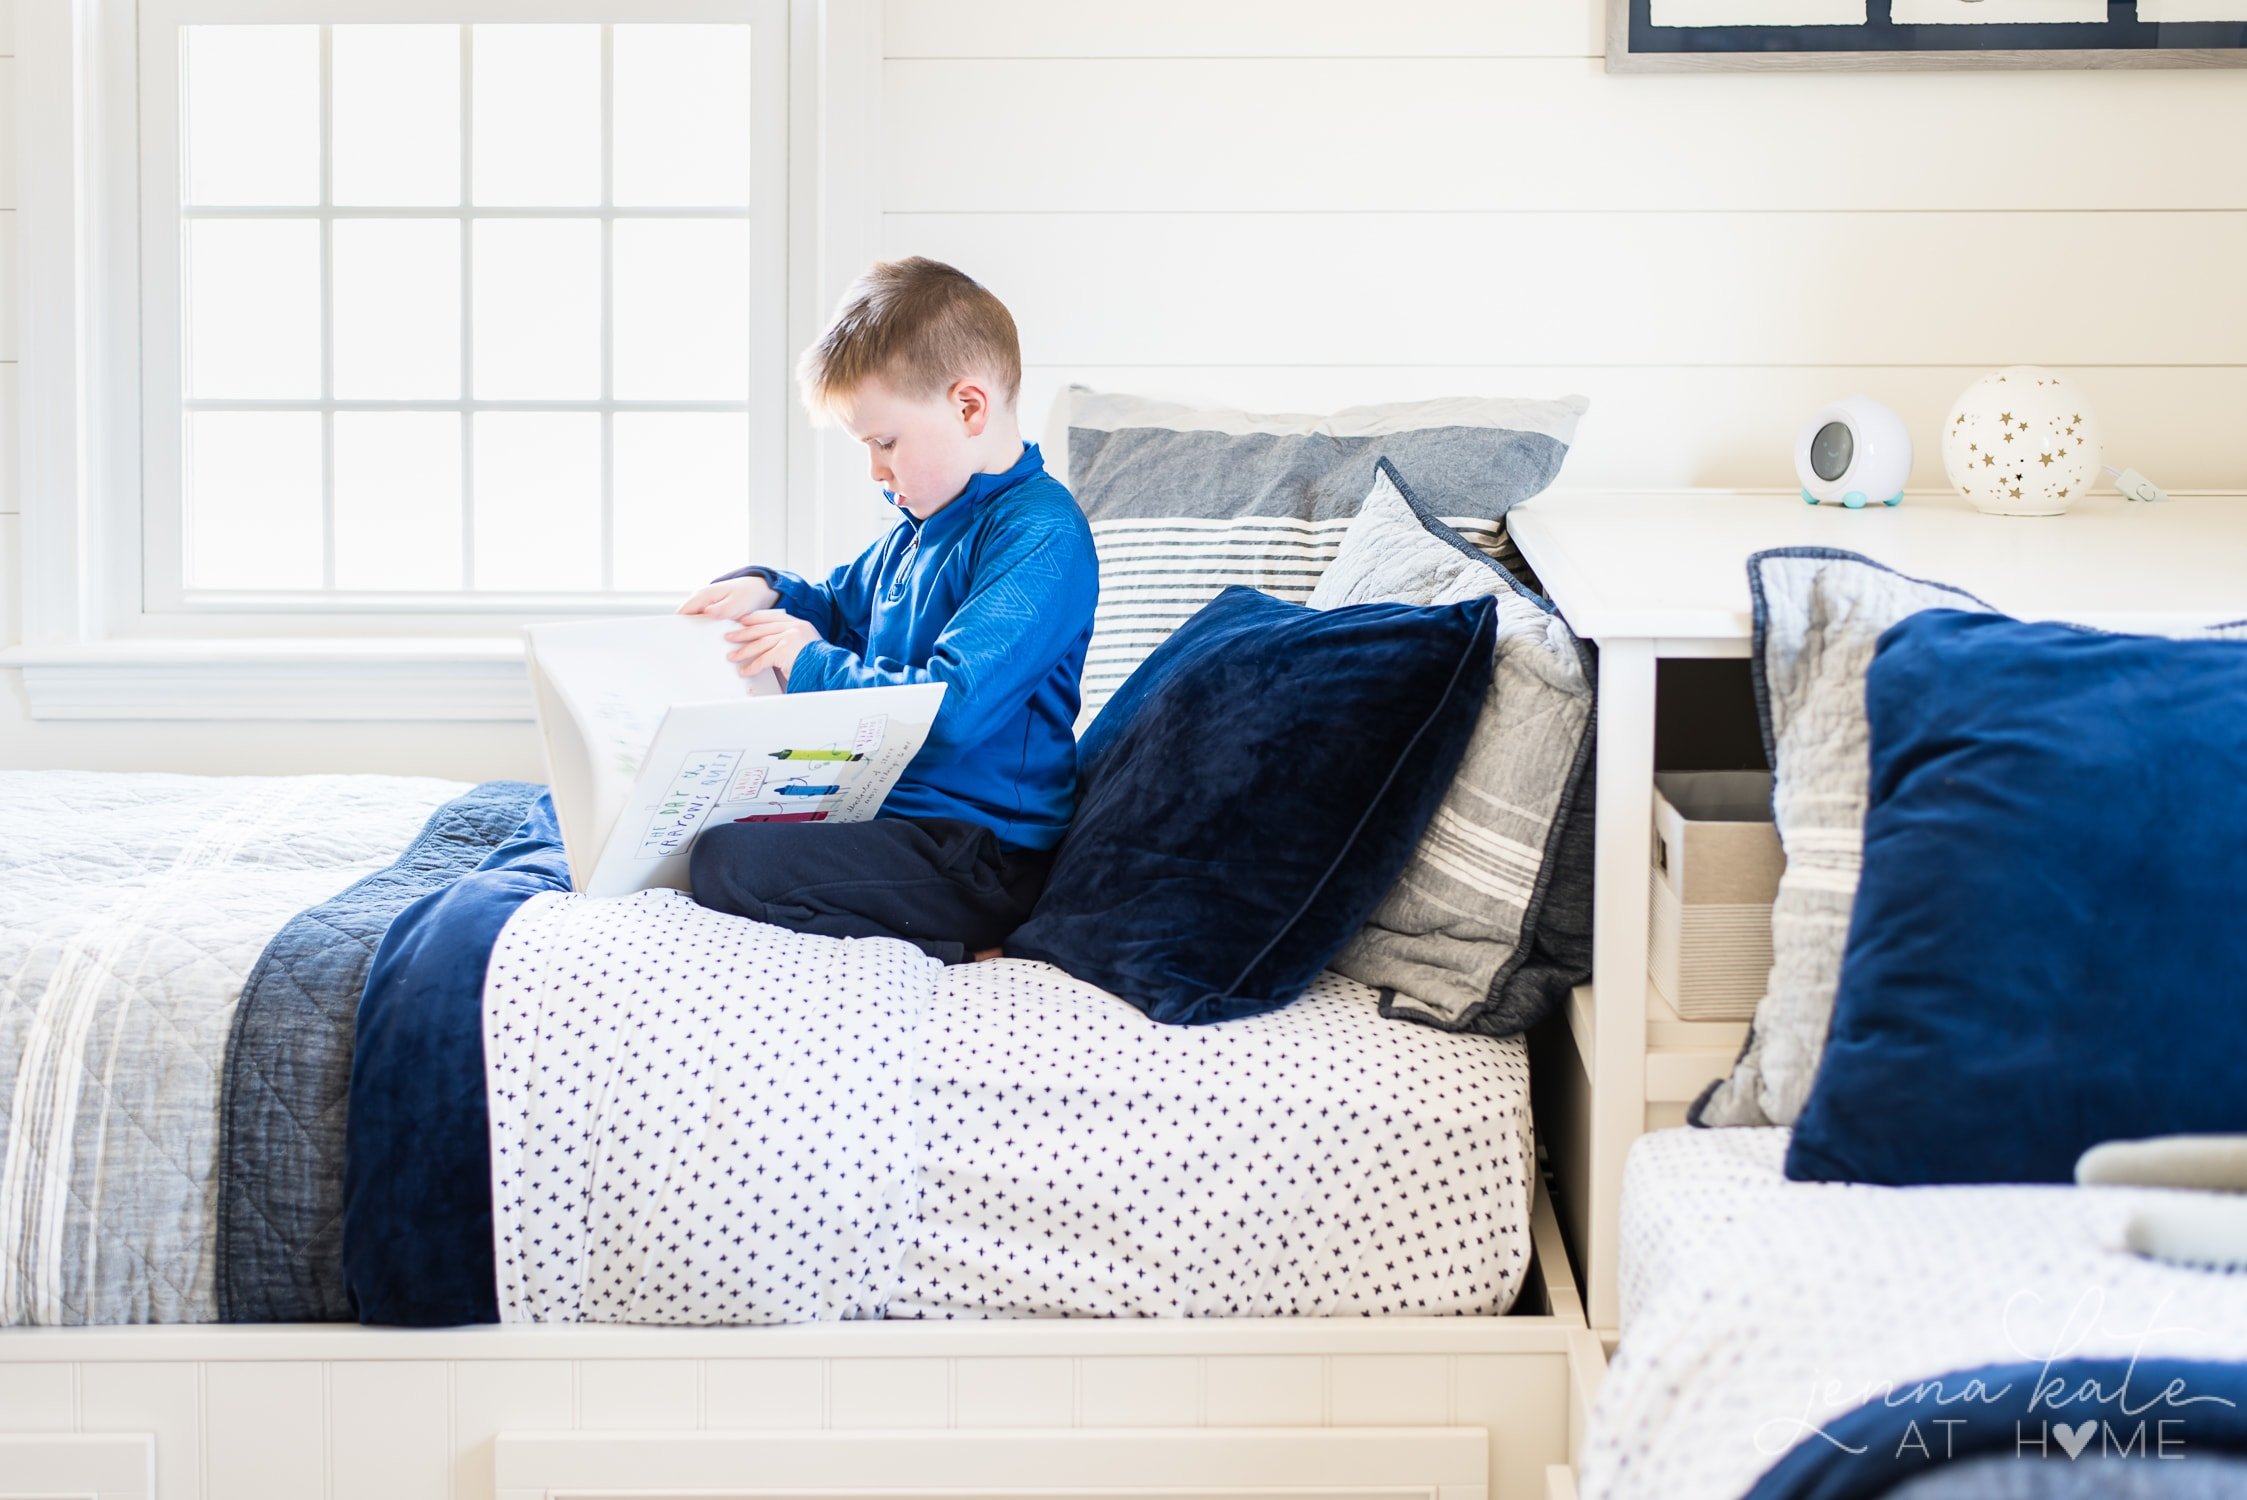 boy bedding, decor and design ideas for big kid bedroom